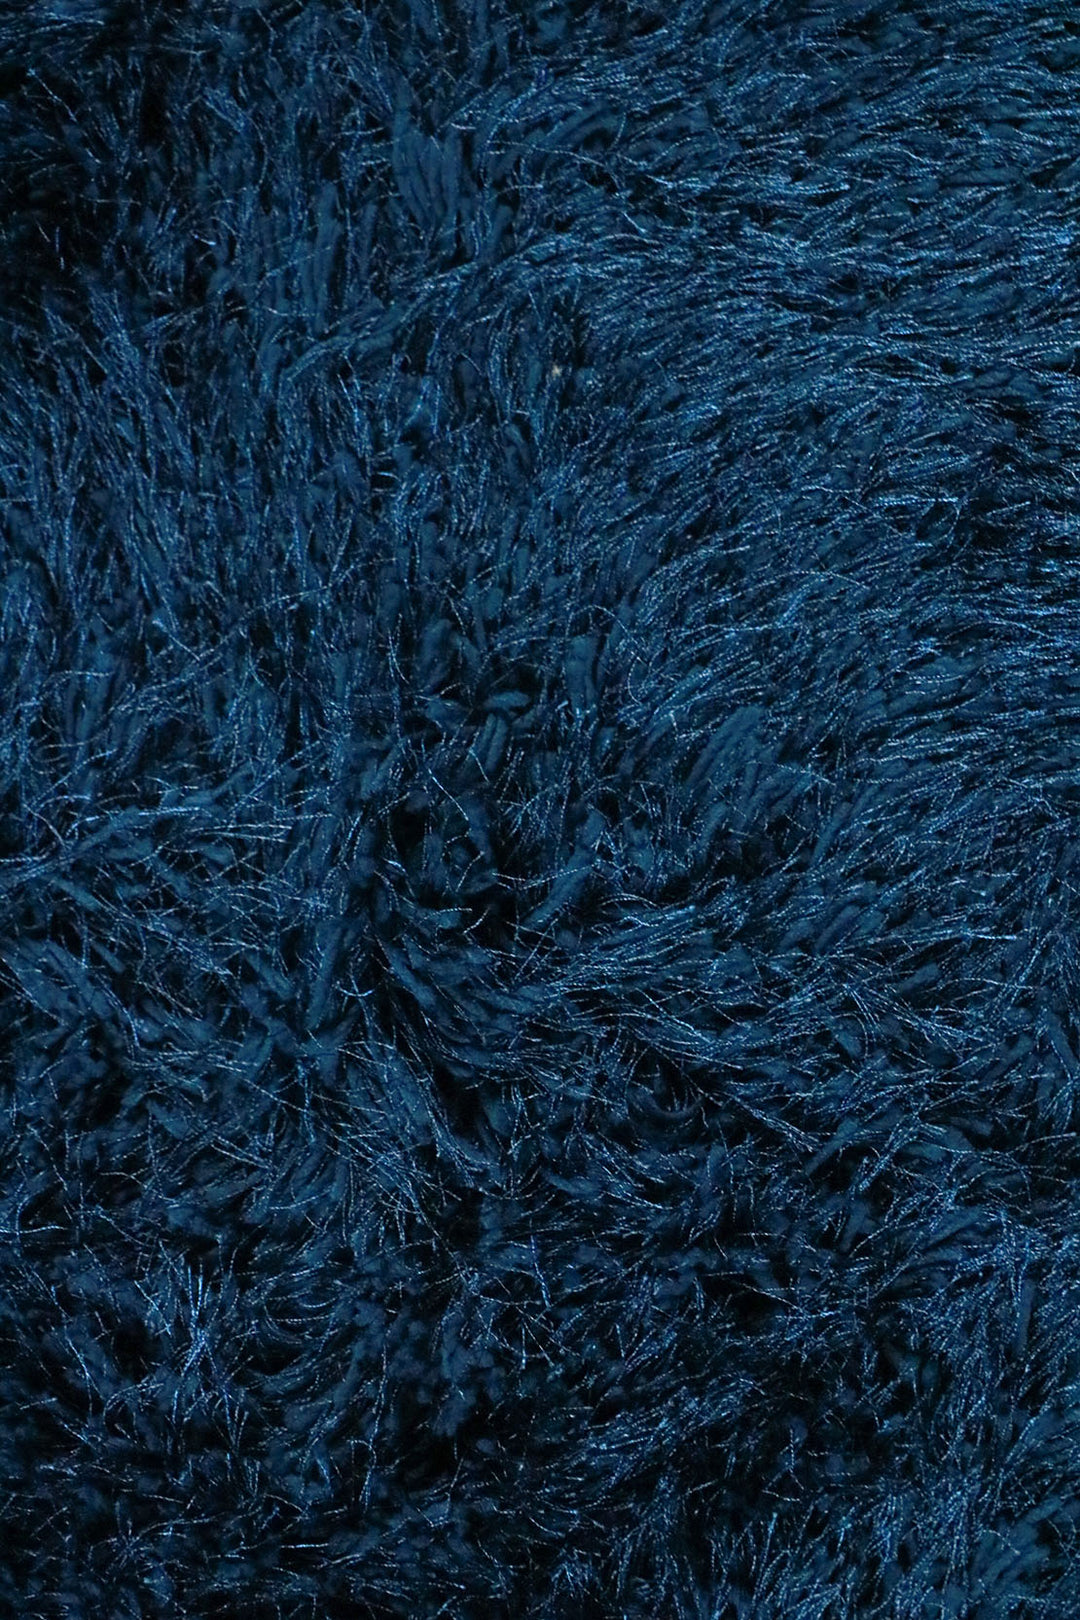 Turkish Plush and Soft  Heaven Shaggy Rug - Blue - 4.9 x 7.2 FT - Fluffy Furry Floor Decor Rug Heaven Shaggy